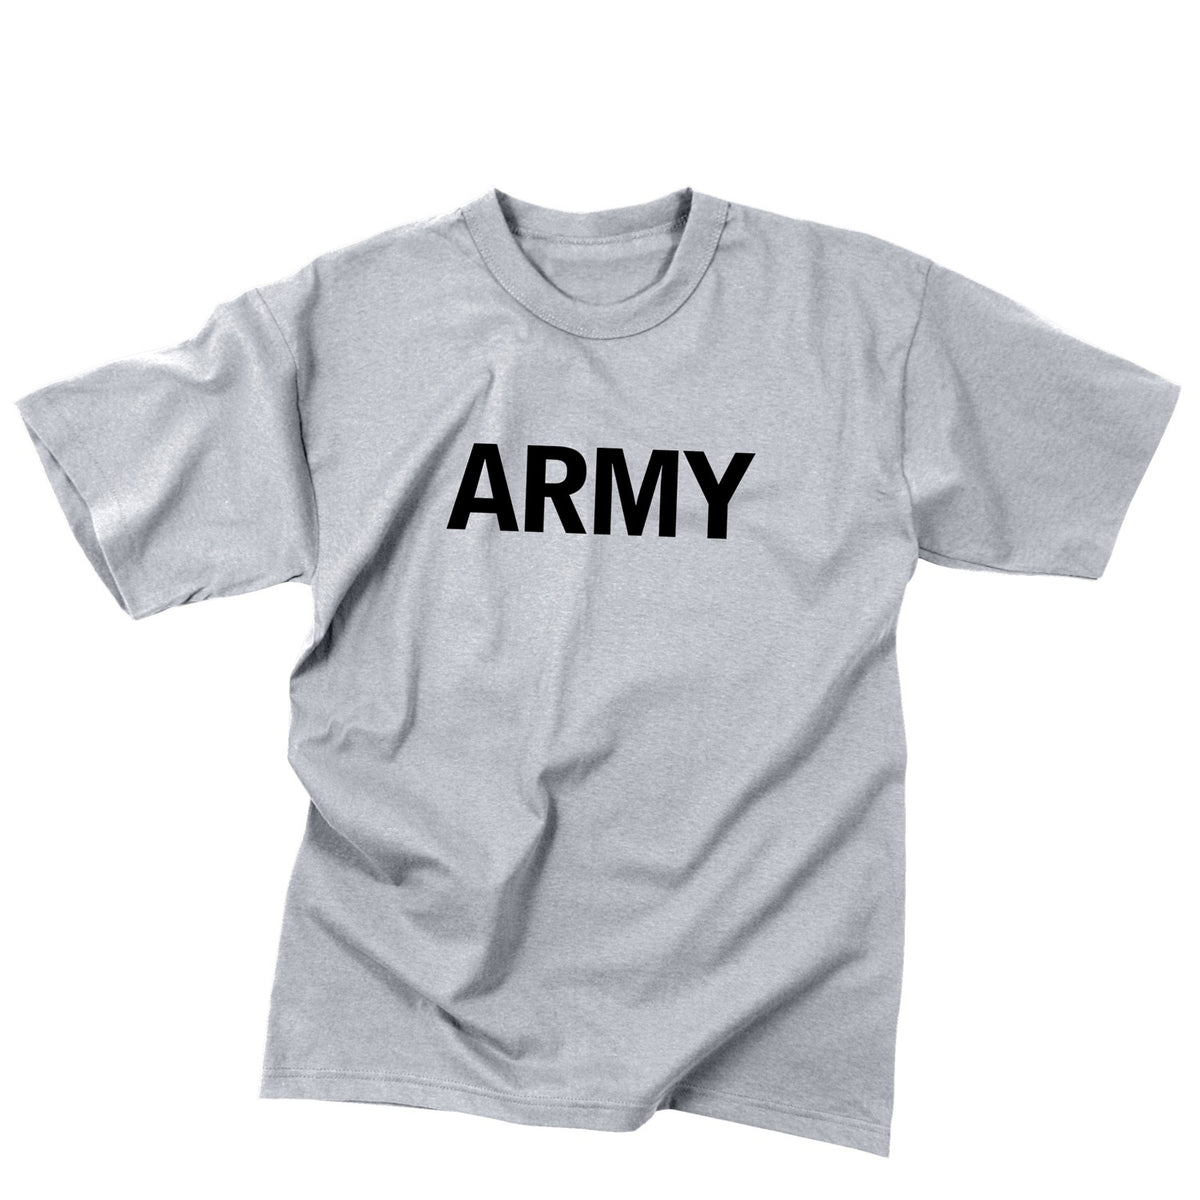 Rothco Kids Army Physical Training T-Shirt Grey